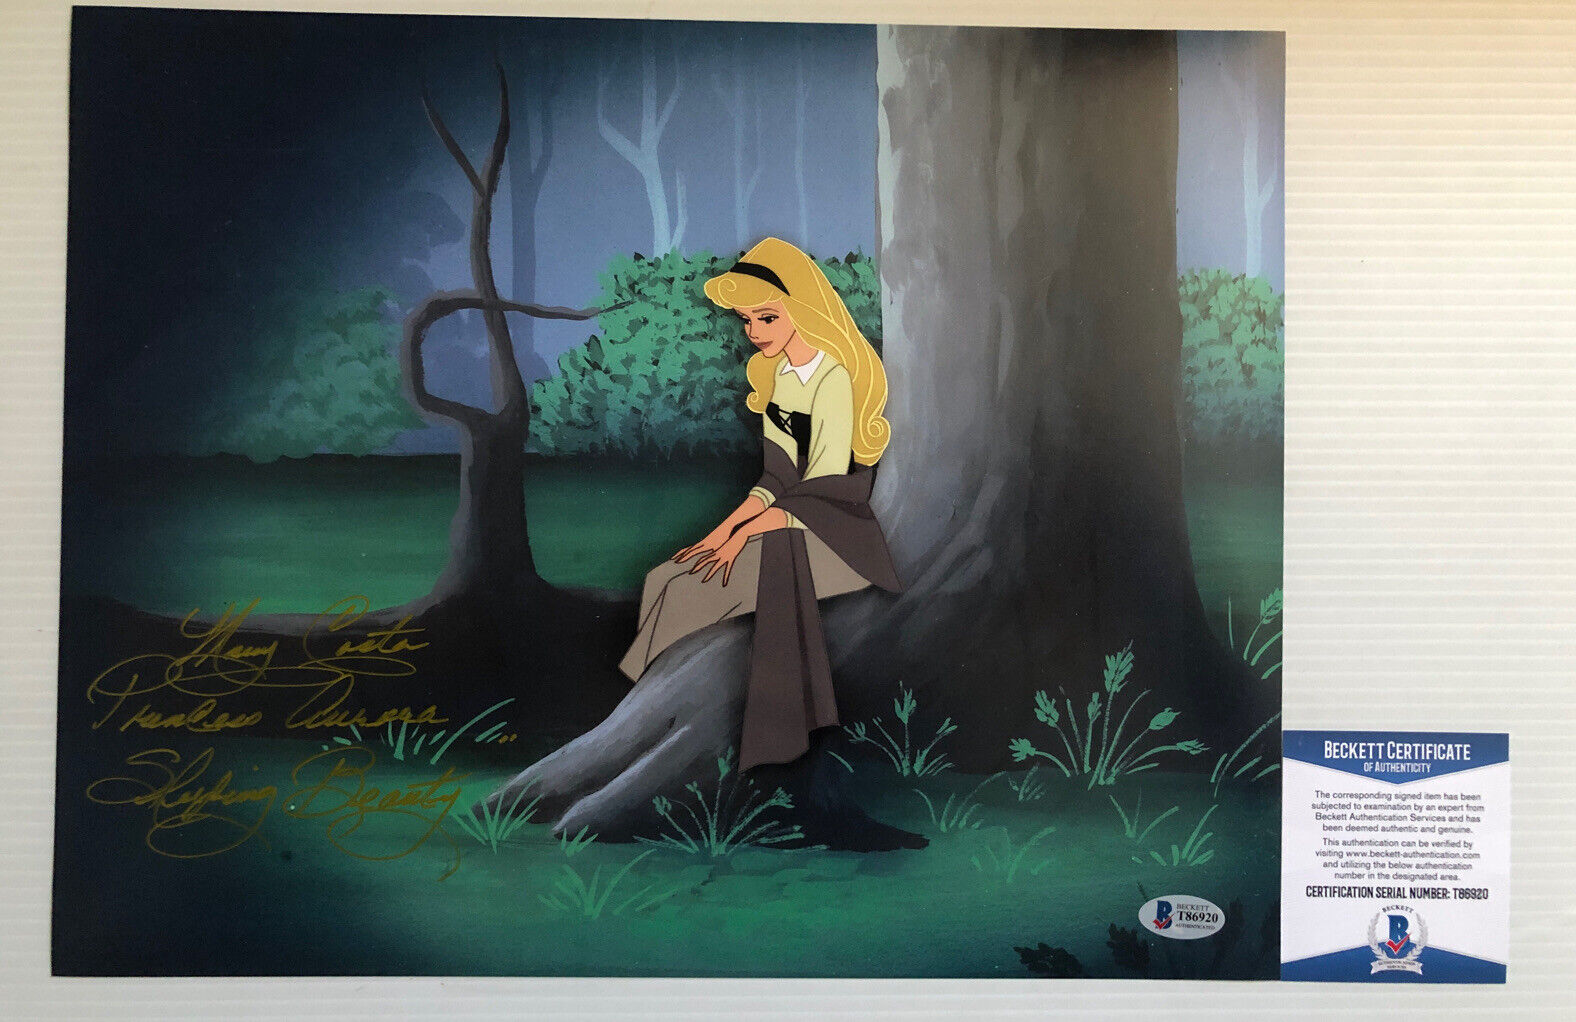 Mary Costa Signed Autographed 11x14 Photo Poster painting Sleeping Beauty Disney Beckett COA 3